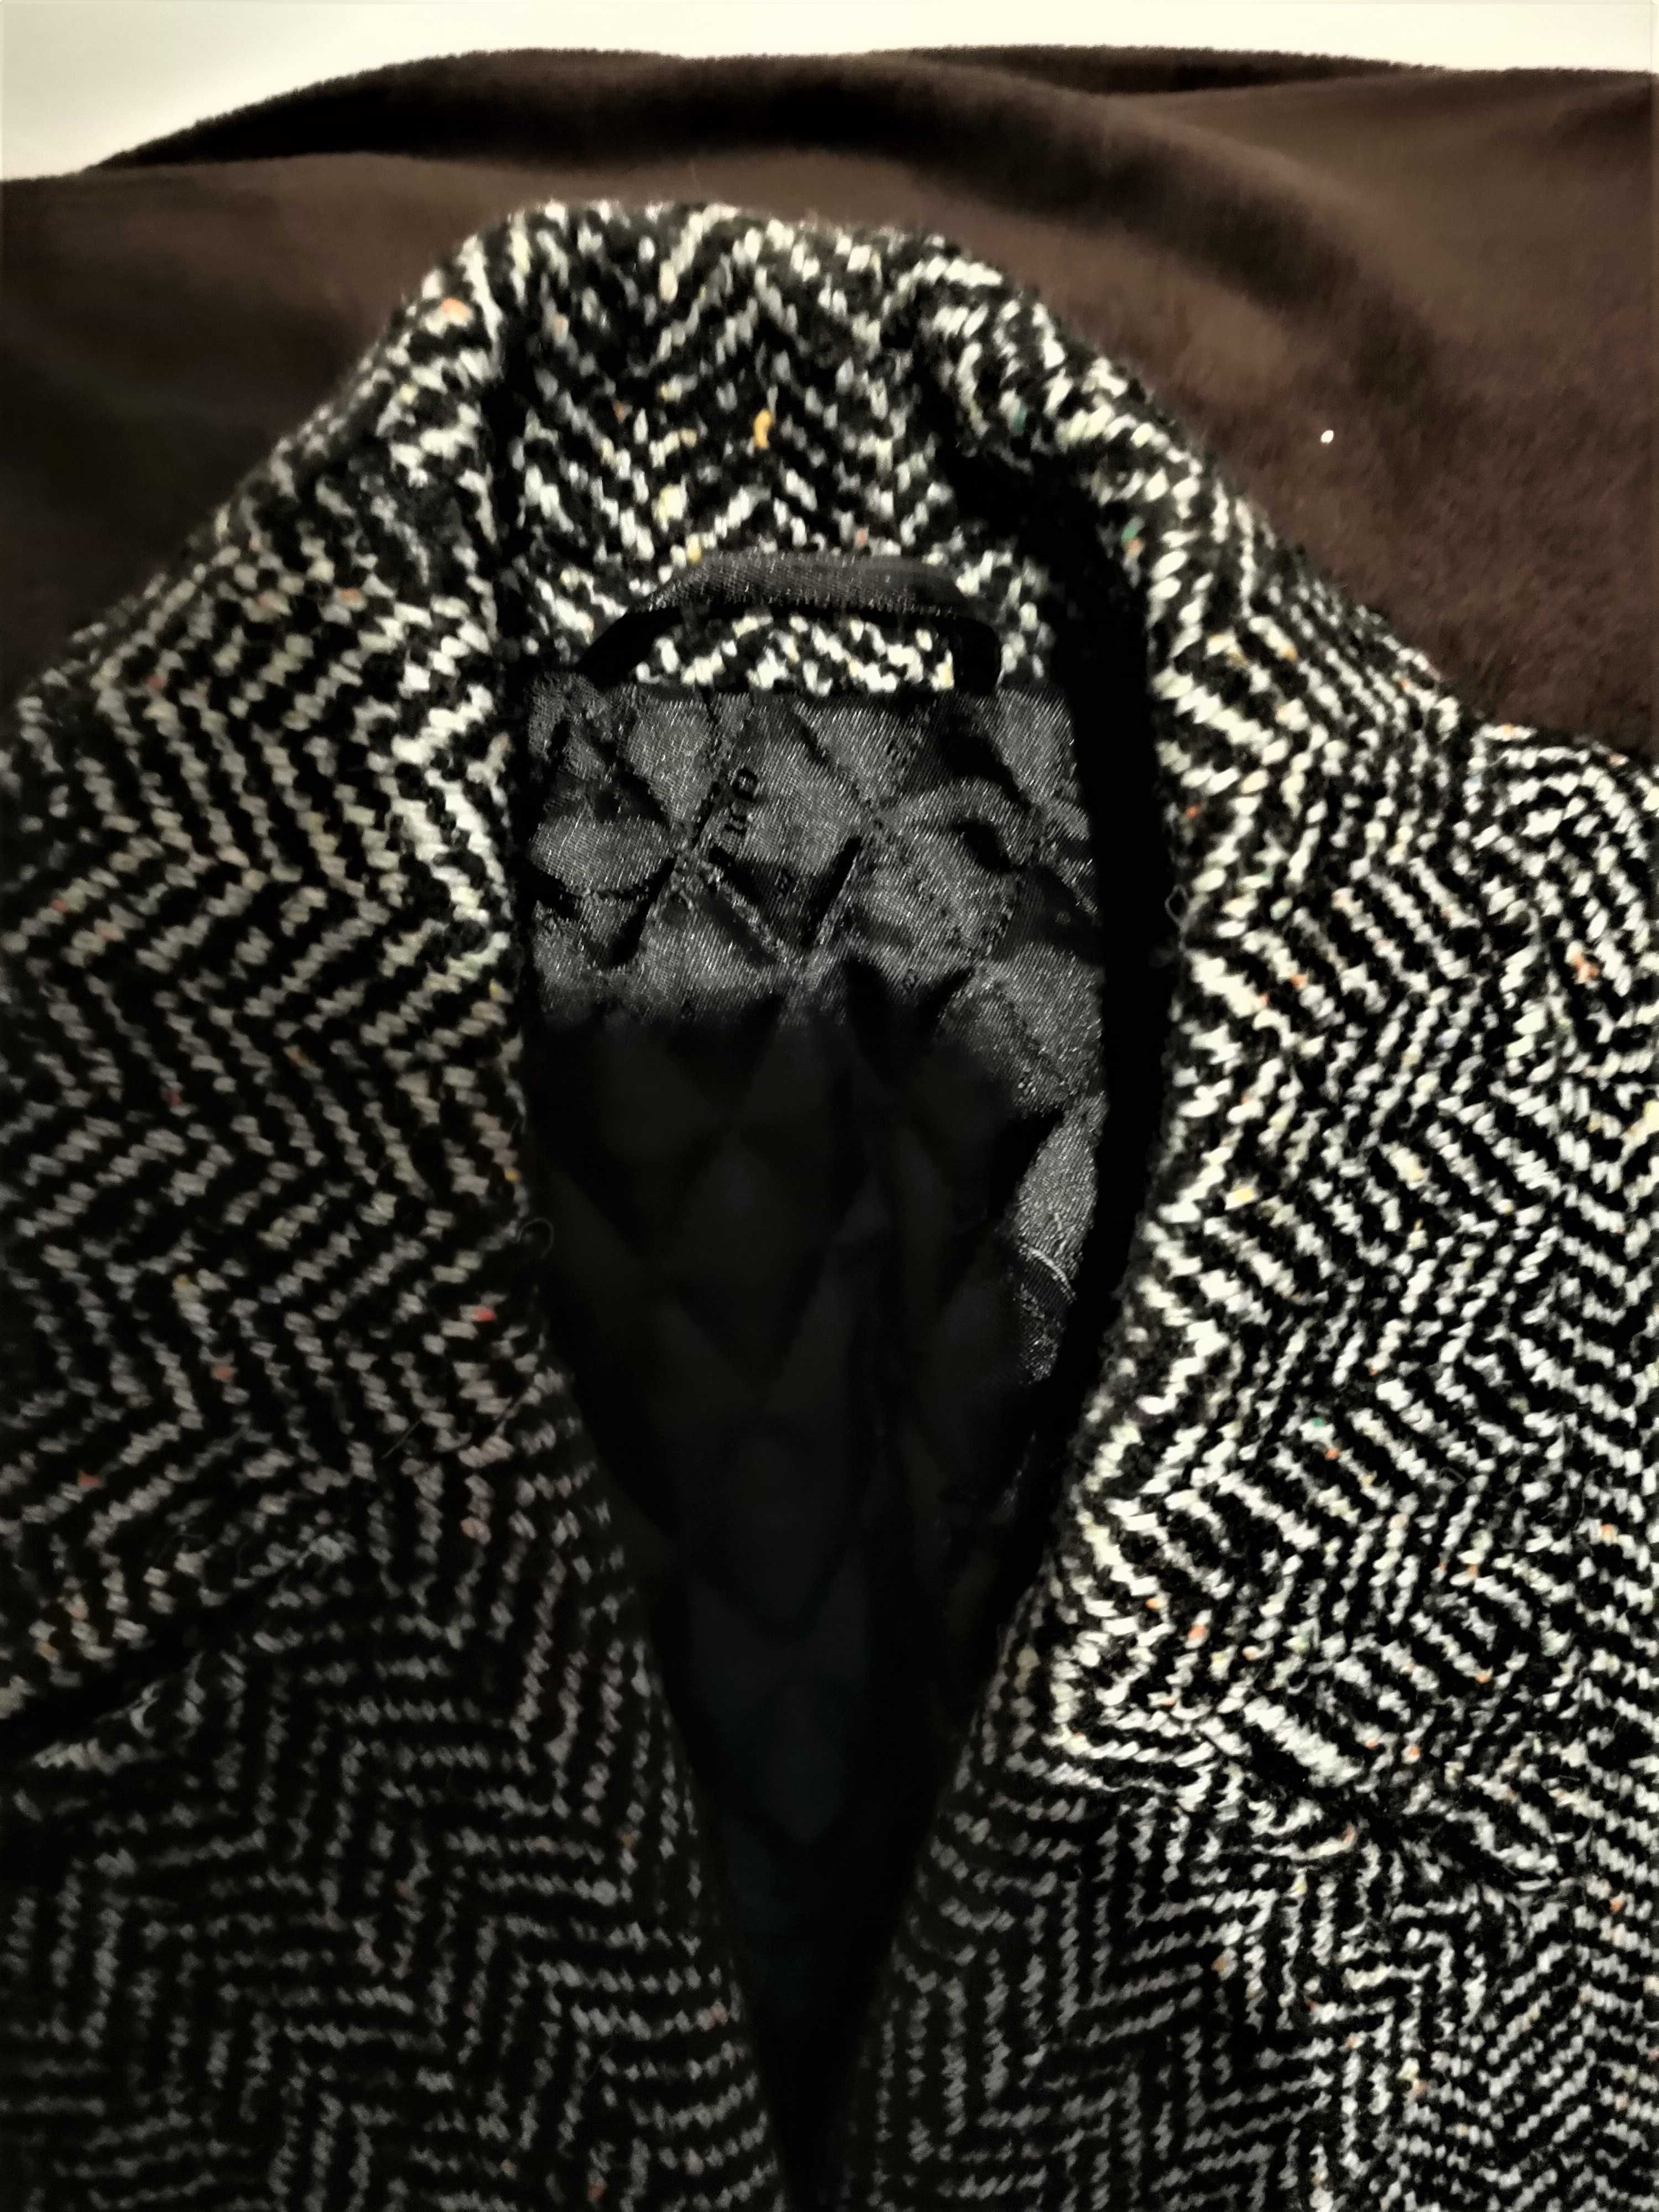 Palton PRENSLER mar 58 ,50-lana-30-vascoza-20-polyester ,negru cu gri